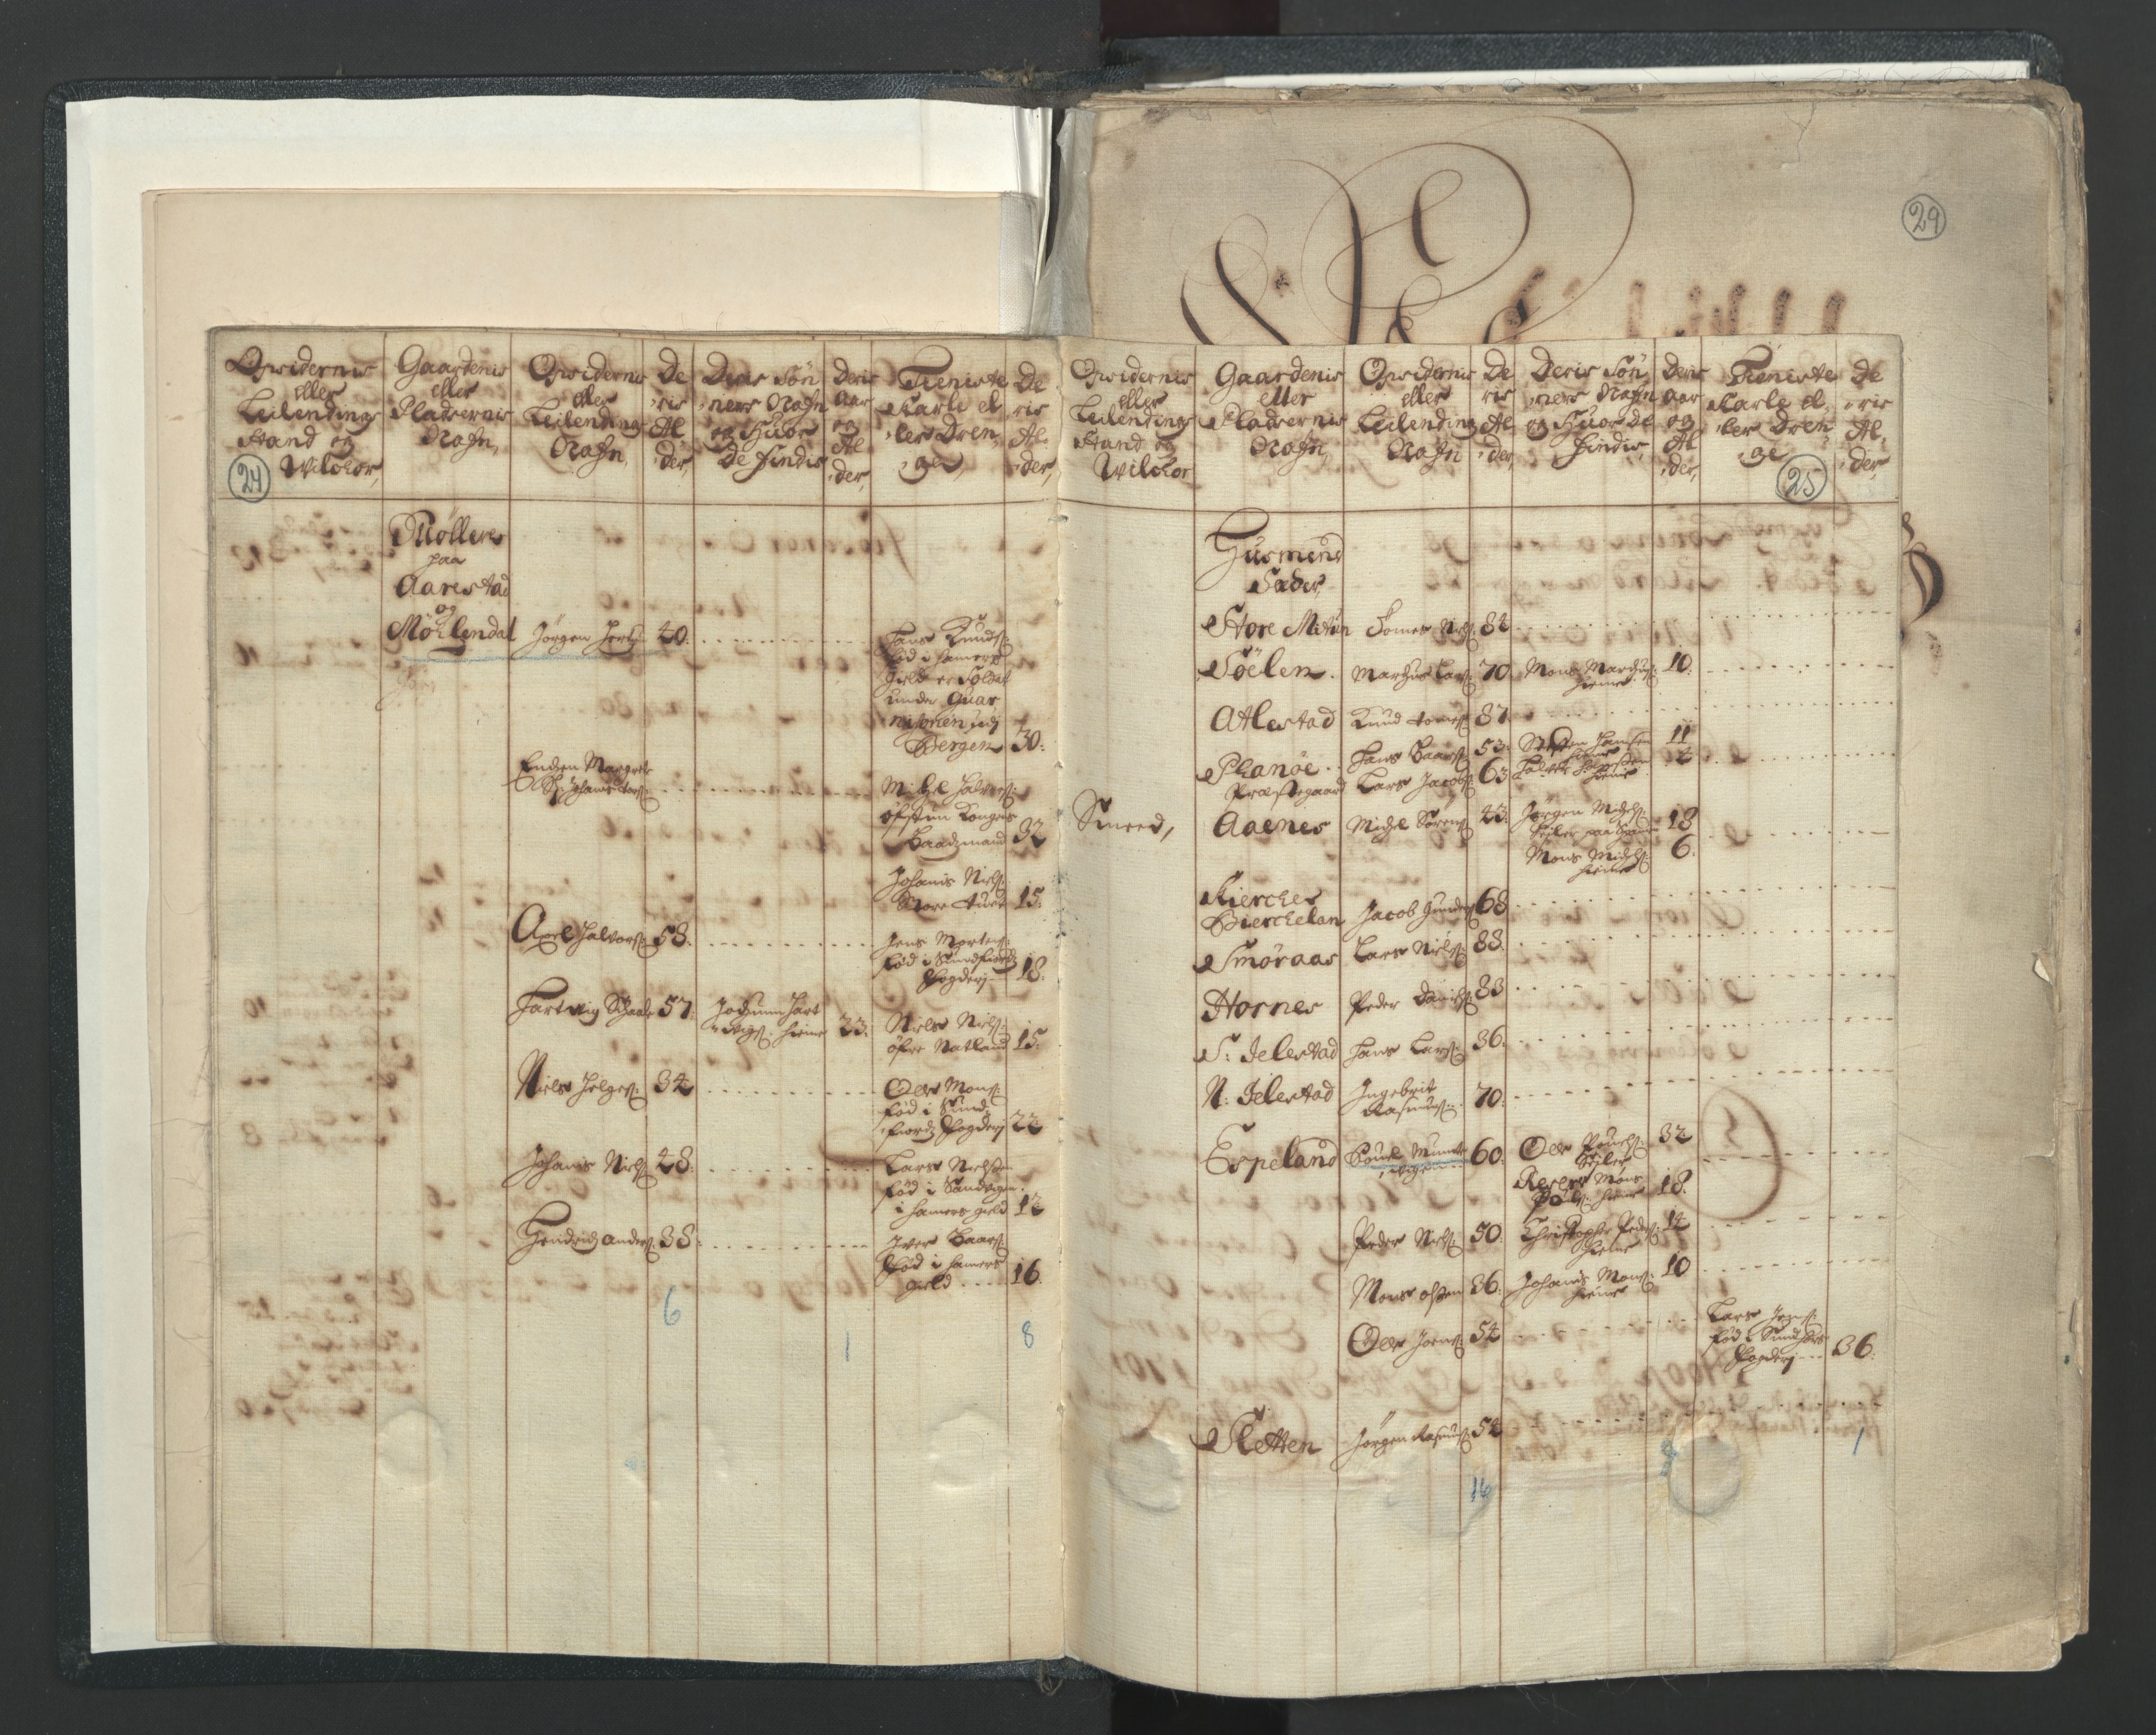 RA, Manntallet 1701, nr. 7: Nordhordland og Voss fogderi, 1701, s. 24-25